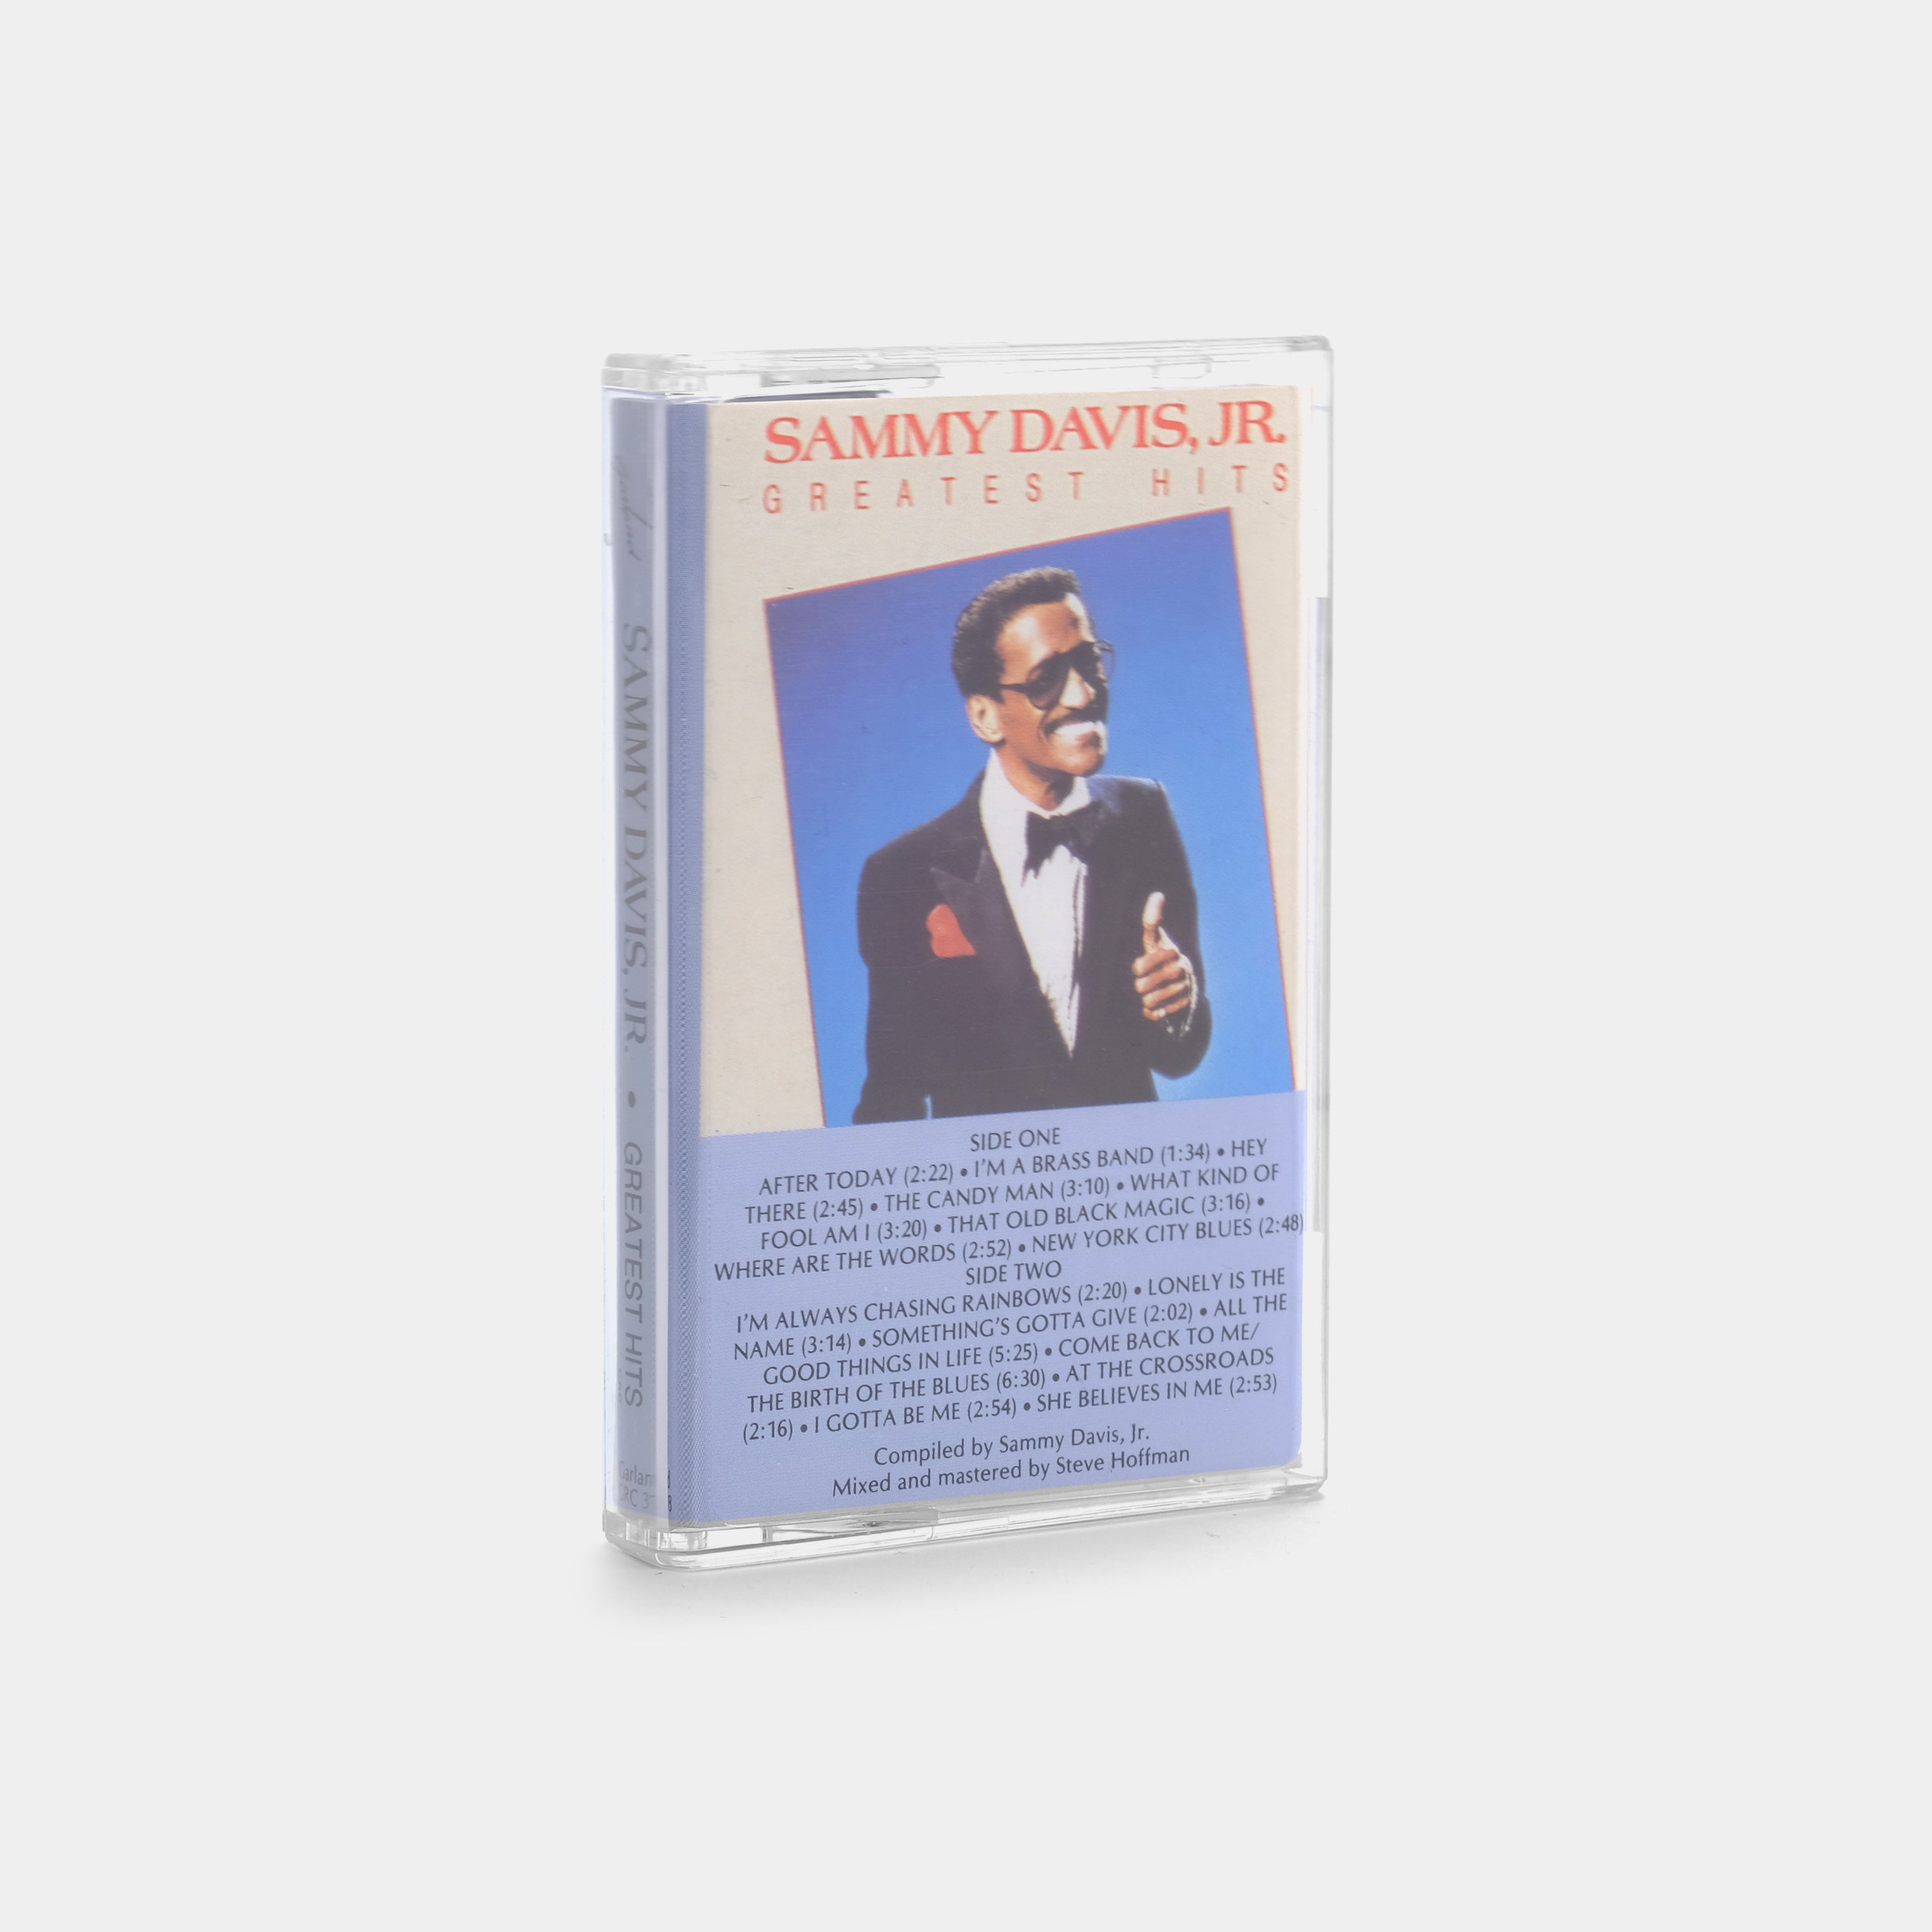 Sammy Davis Jr. - Greatest Hits Cassette Tape